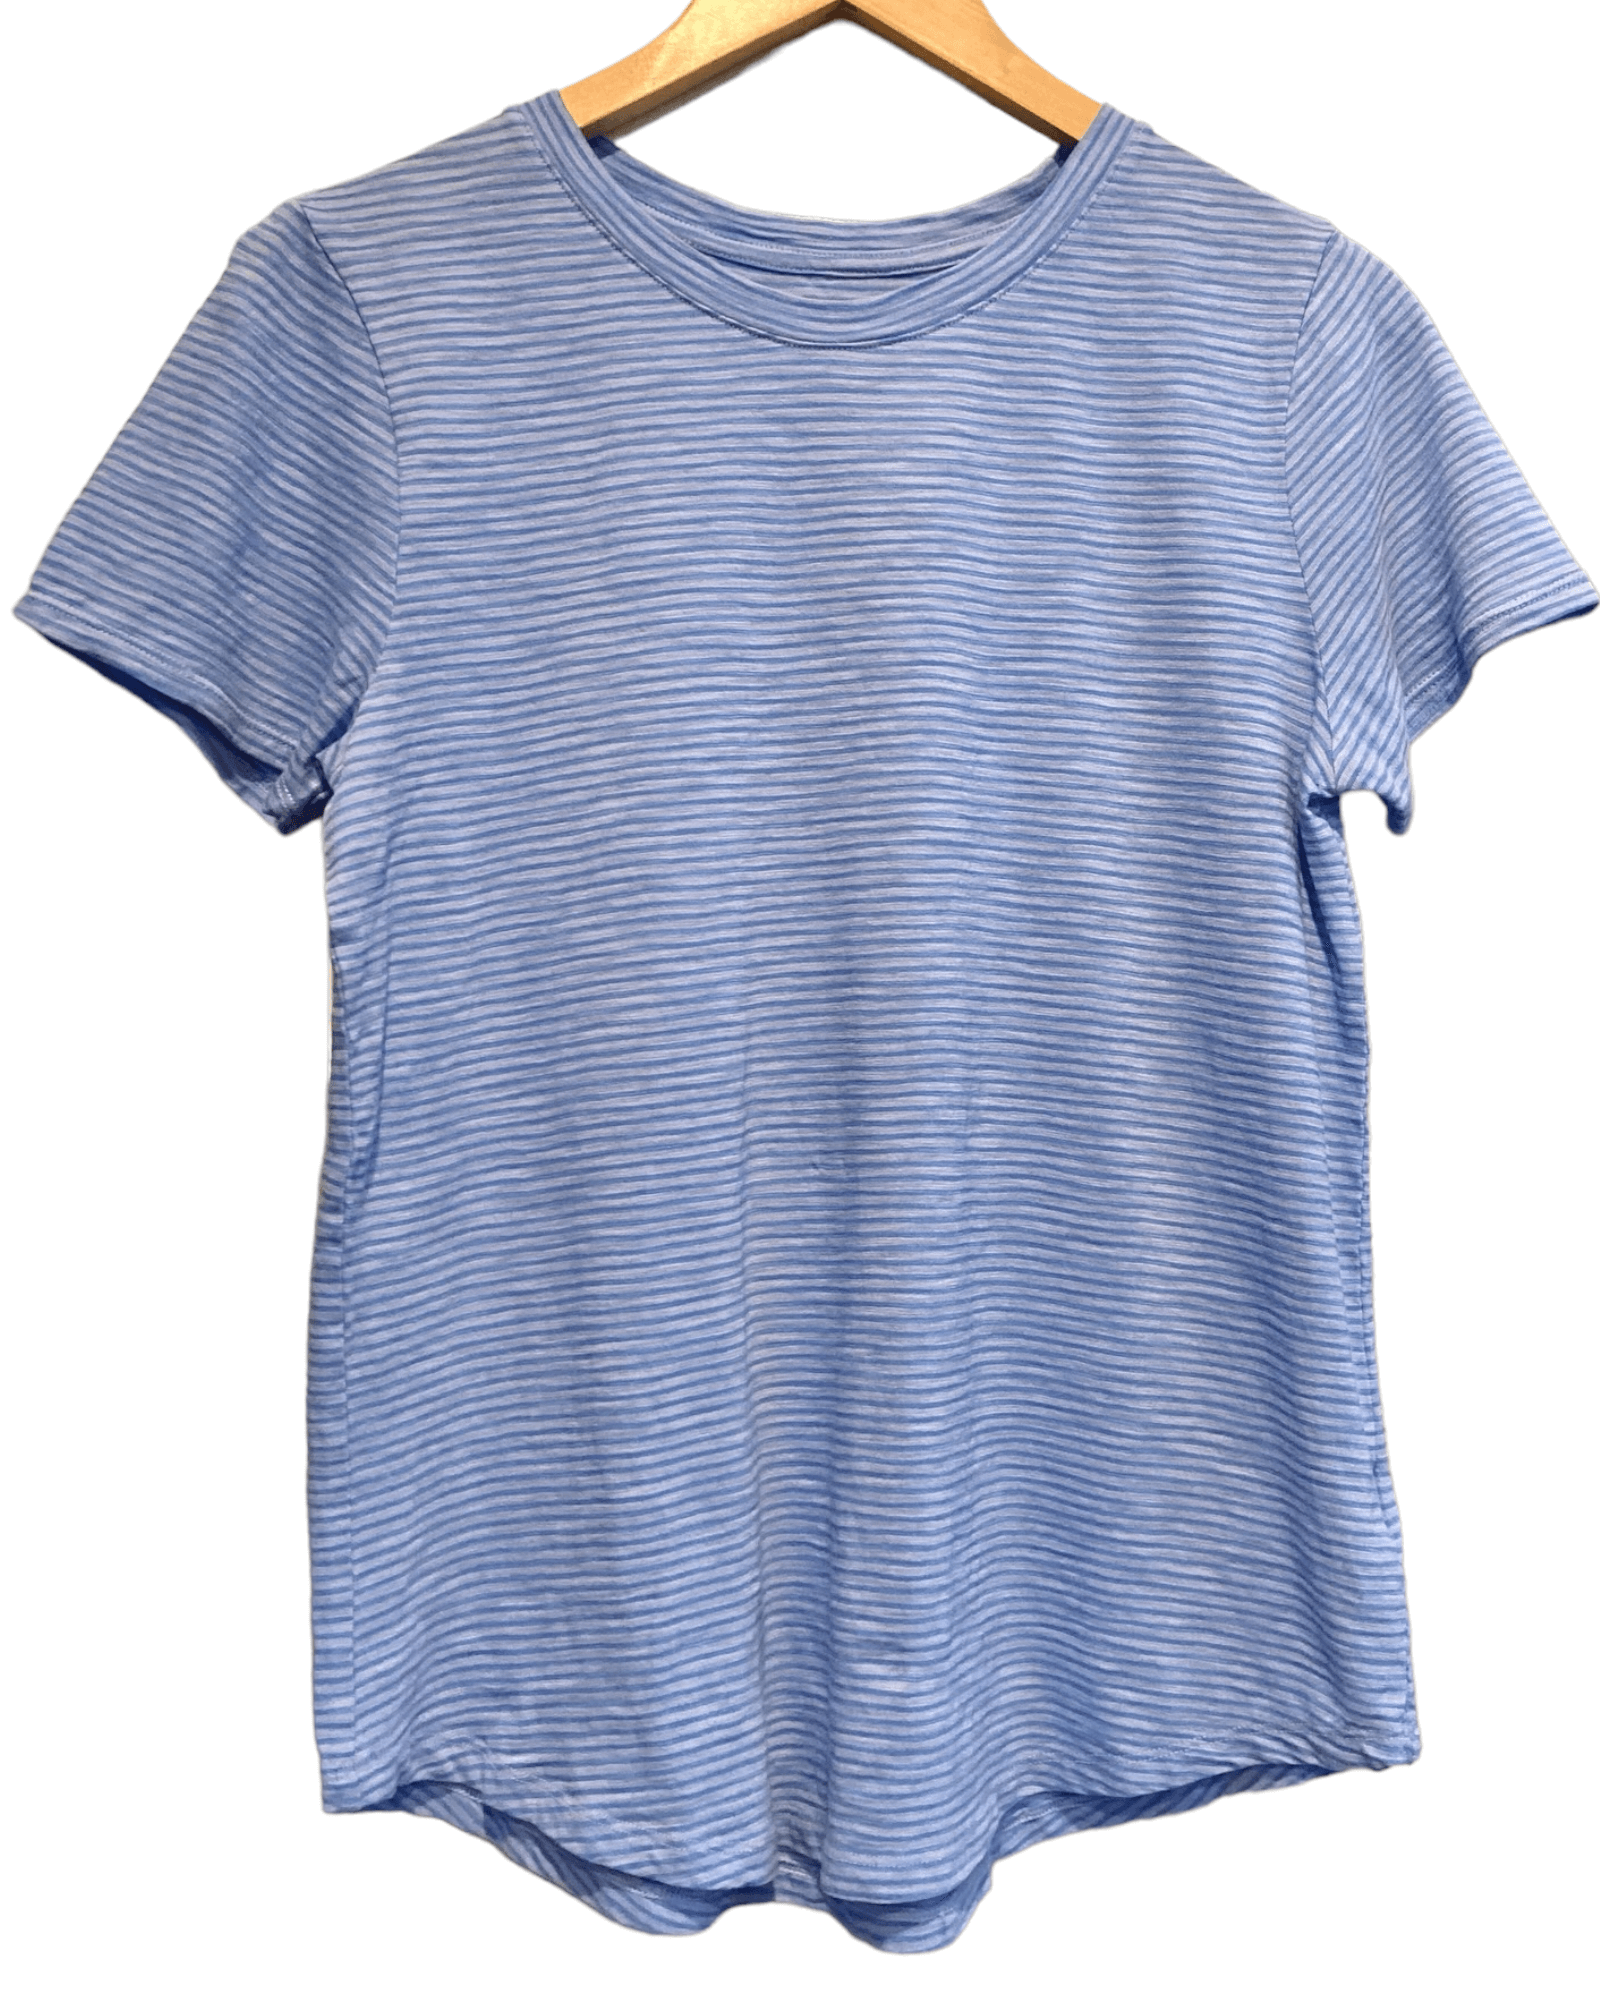 Cool Summer OLD NAVY flax flower blue striped tee t-shirt